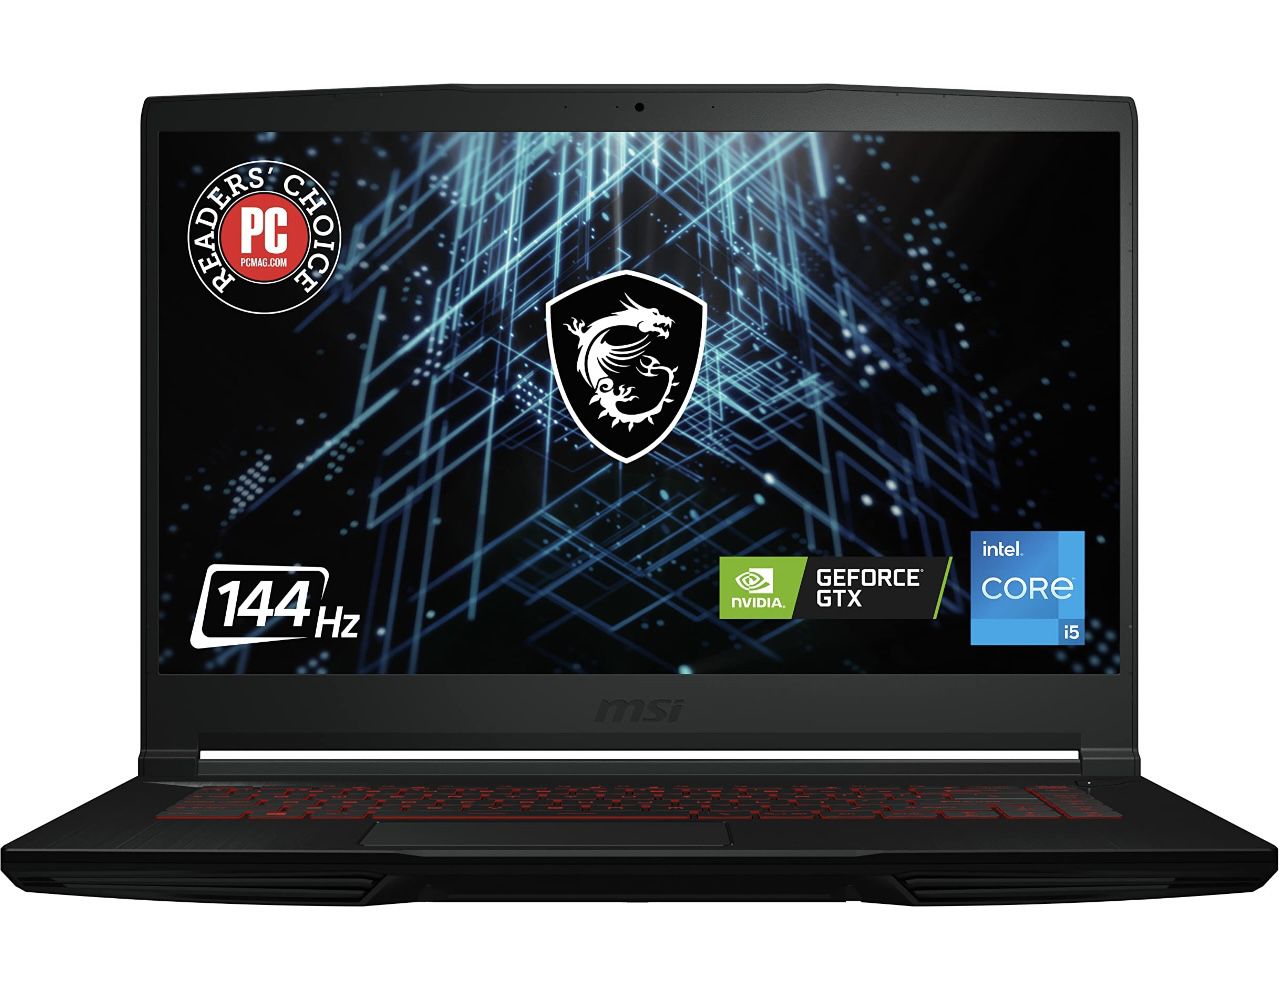 MSI GV15 15.6" 144Hz Gaming Laptop: Intel Core i5-11400H GTX 1650 8GB 256GB NVMe SSD, Wi-Fi 6, USB Type-C, Nahimic 3 Audio Immersion, Win 11: Black 11